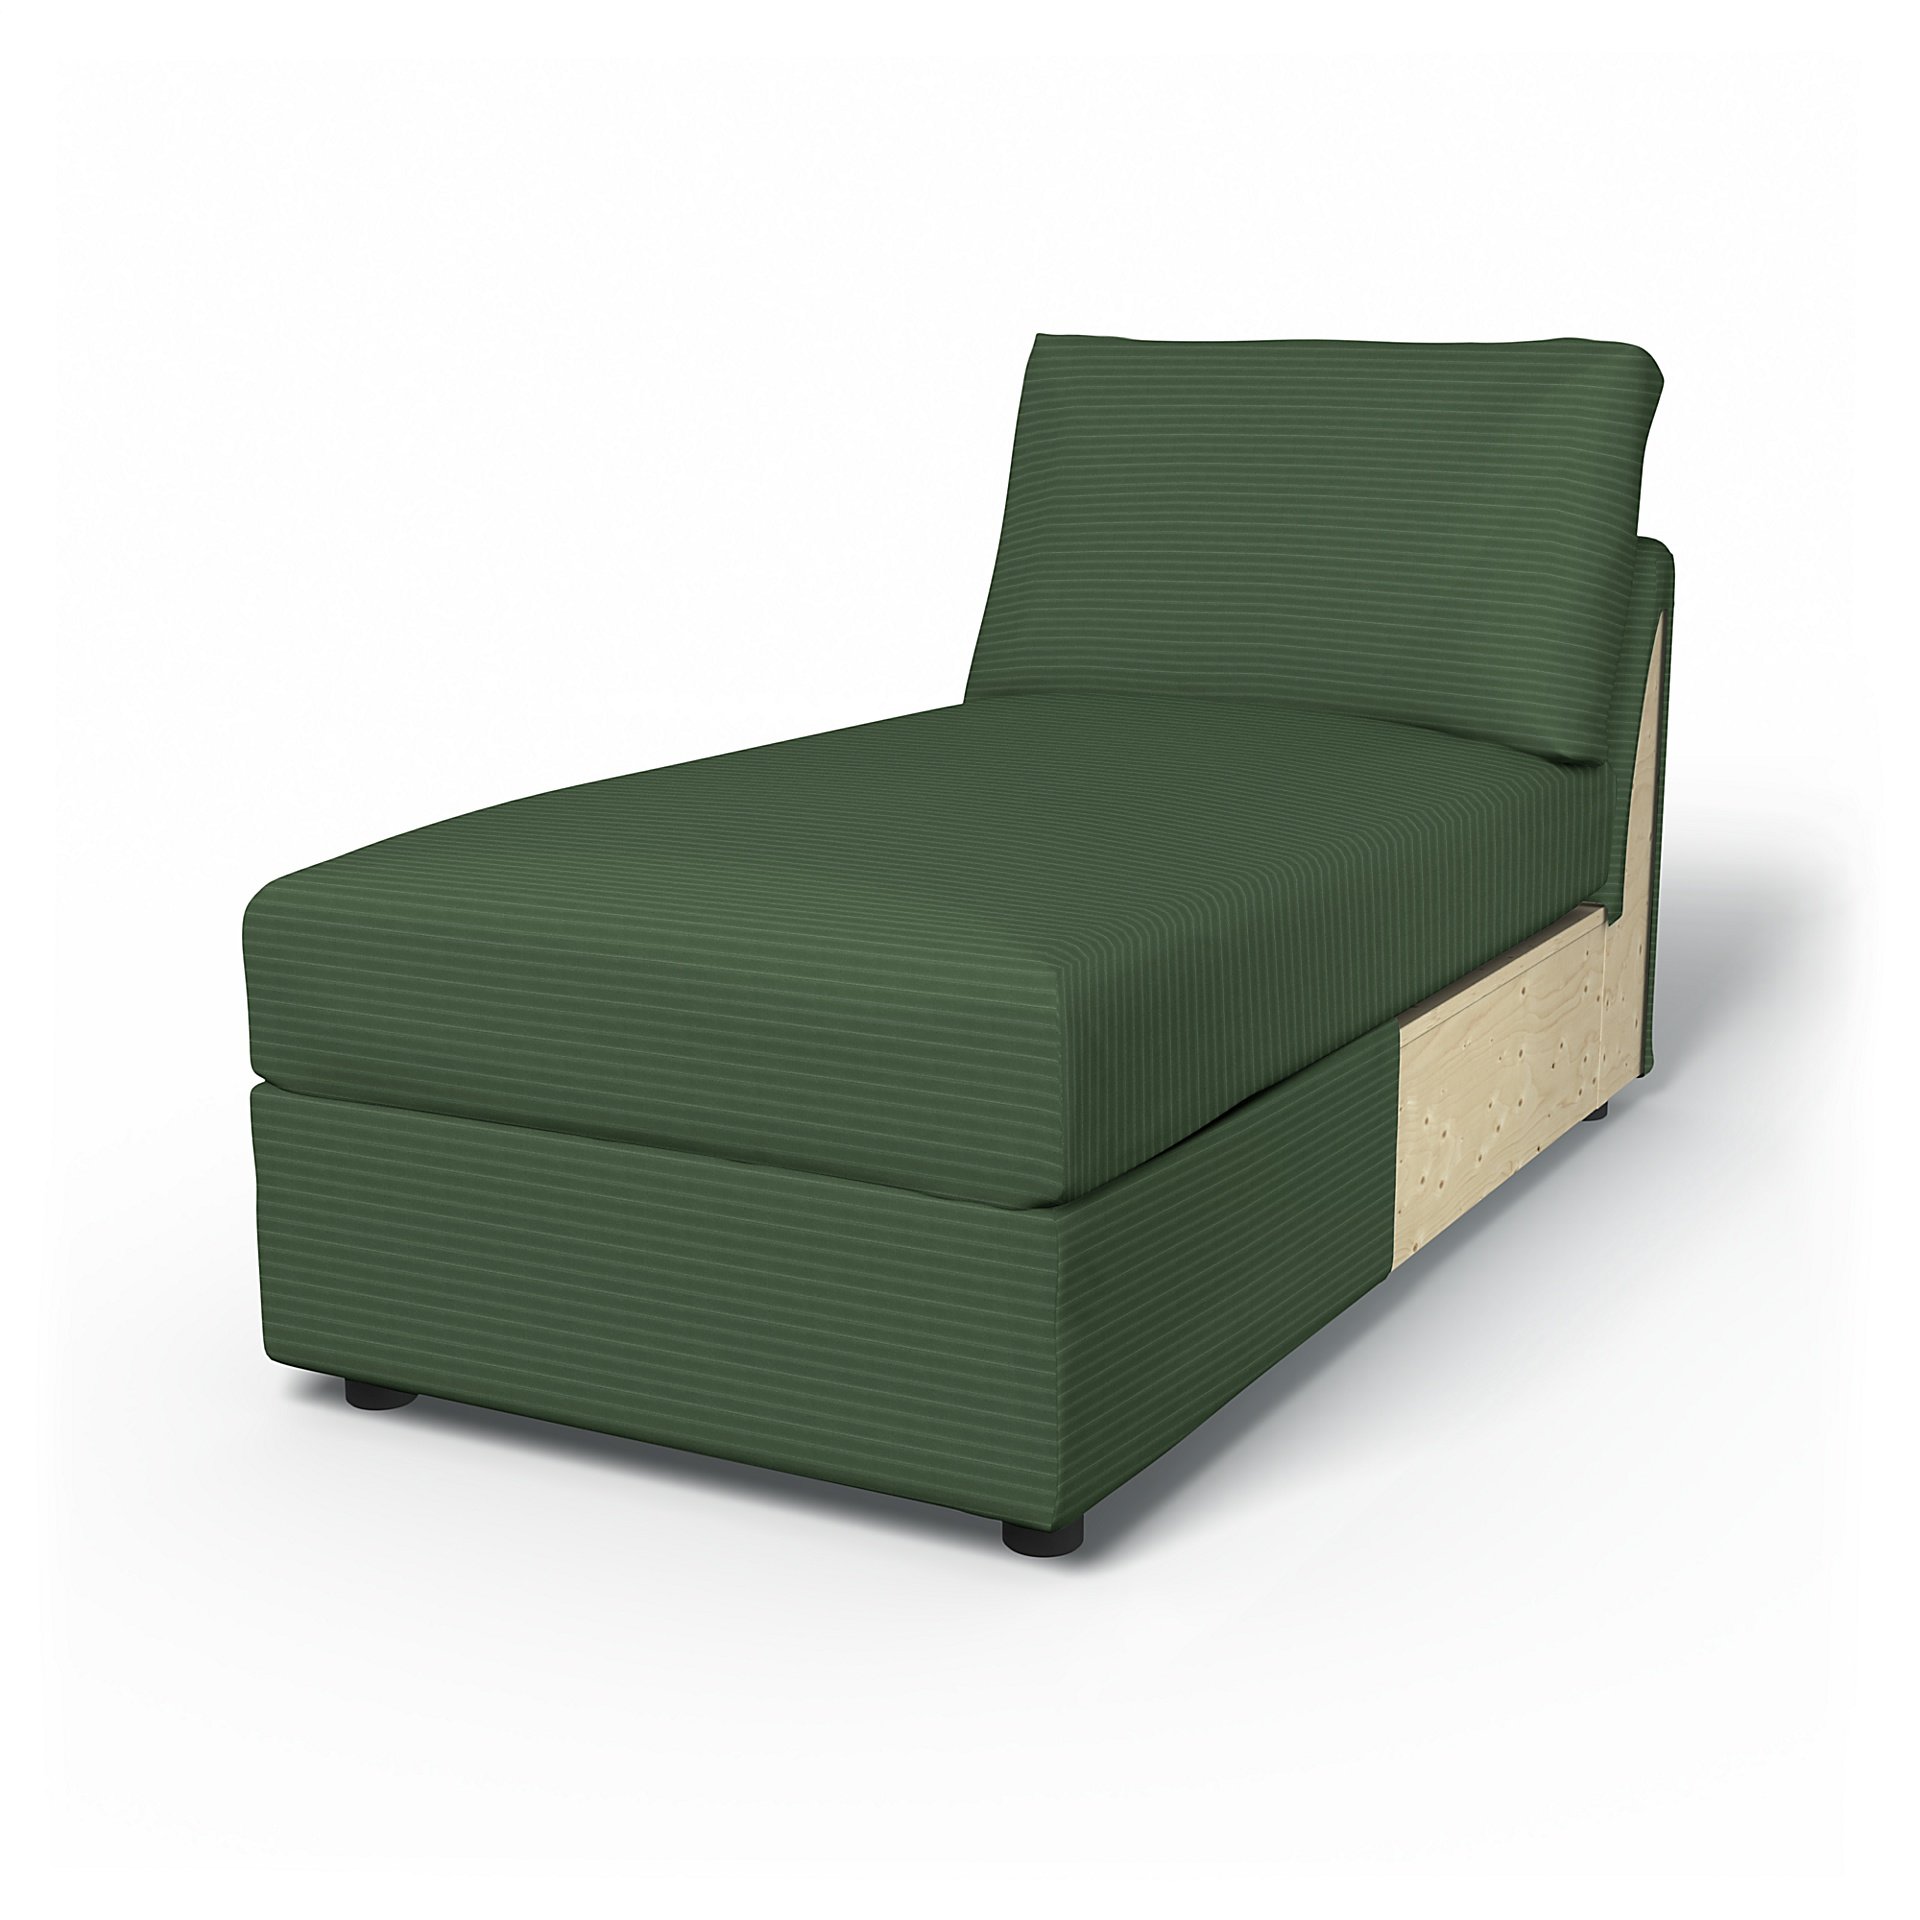 IKEA - Vimle Chaise Longue Cover, Palm Green, Corduroy - Bemz